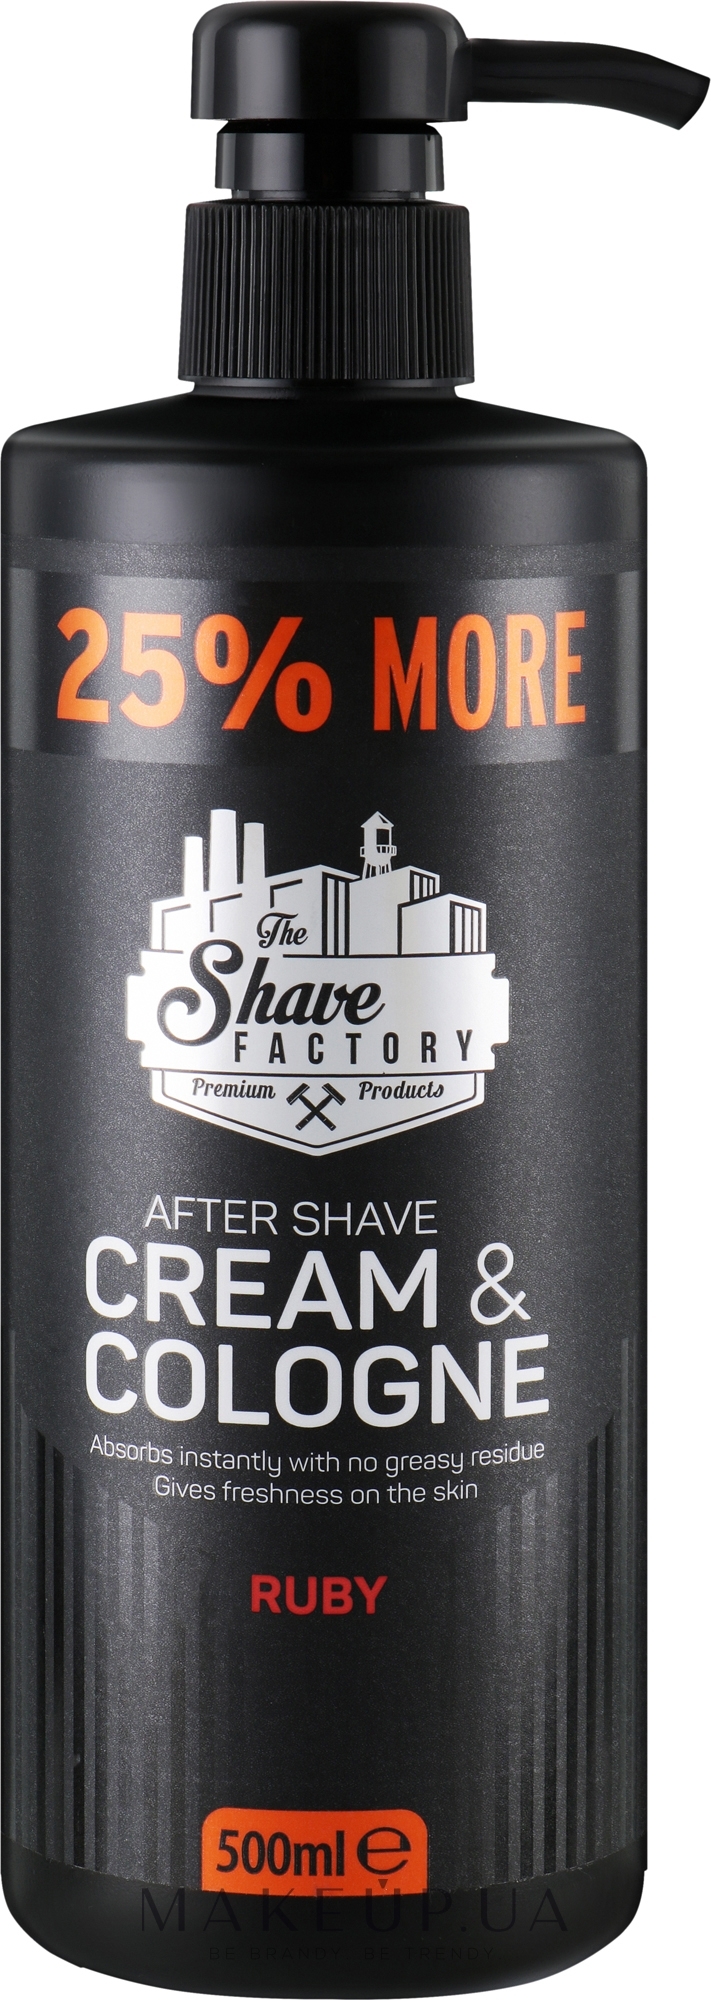 Крем-одеколон після гоління - The Shave Factory Cream & Cologne Ruby — фото 500ml